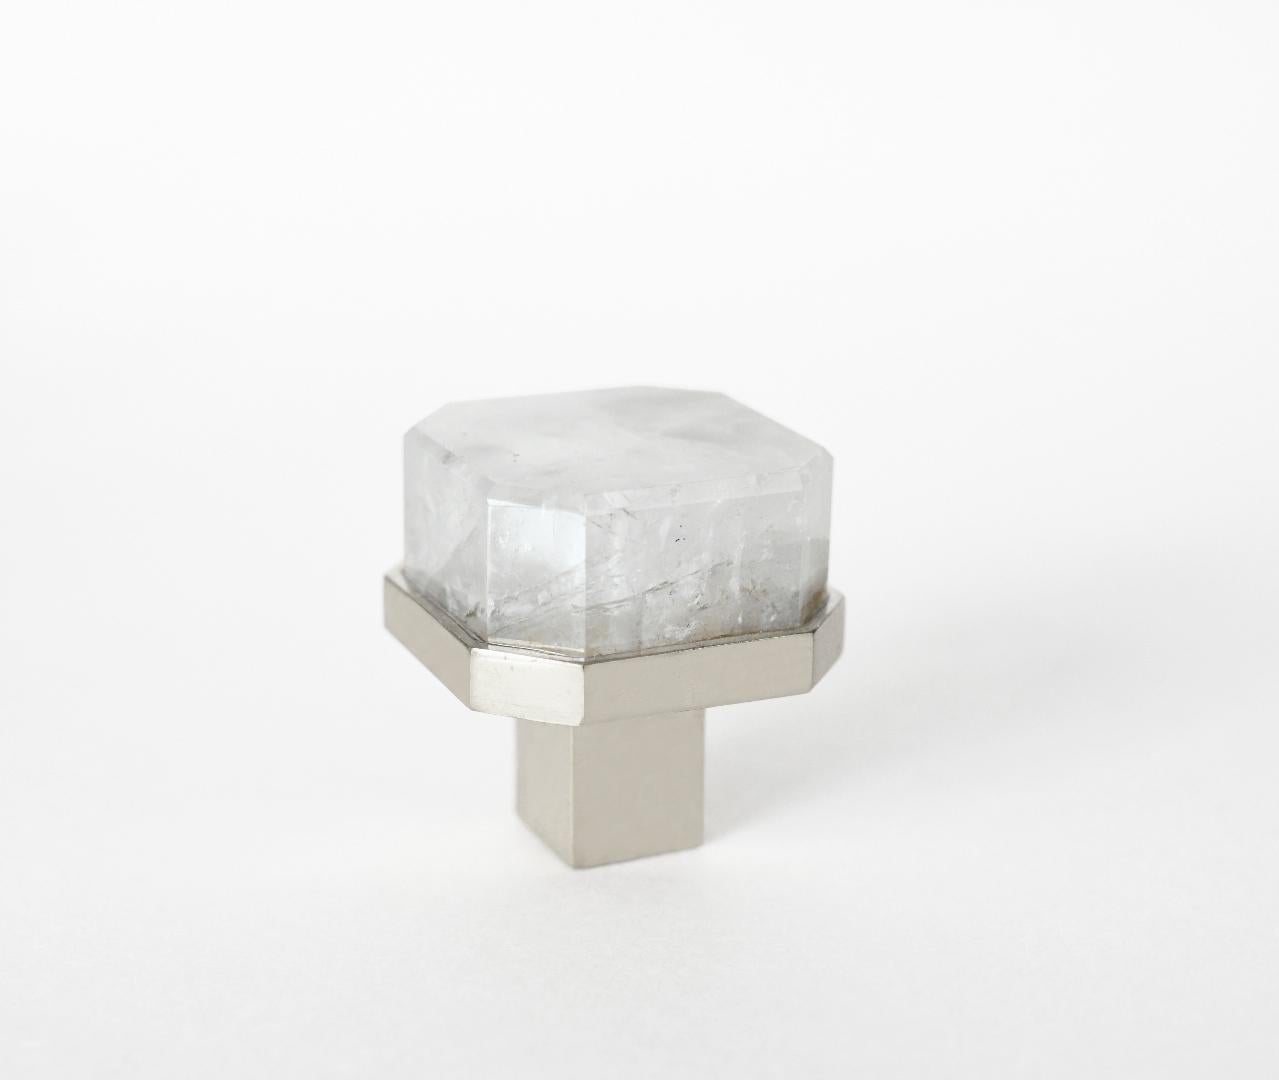 Bouton en quartz de cristal de roche de forme octogonale avec base en nickel. Créé par Phoenix Gallery, NYC.